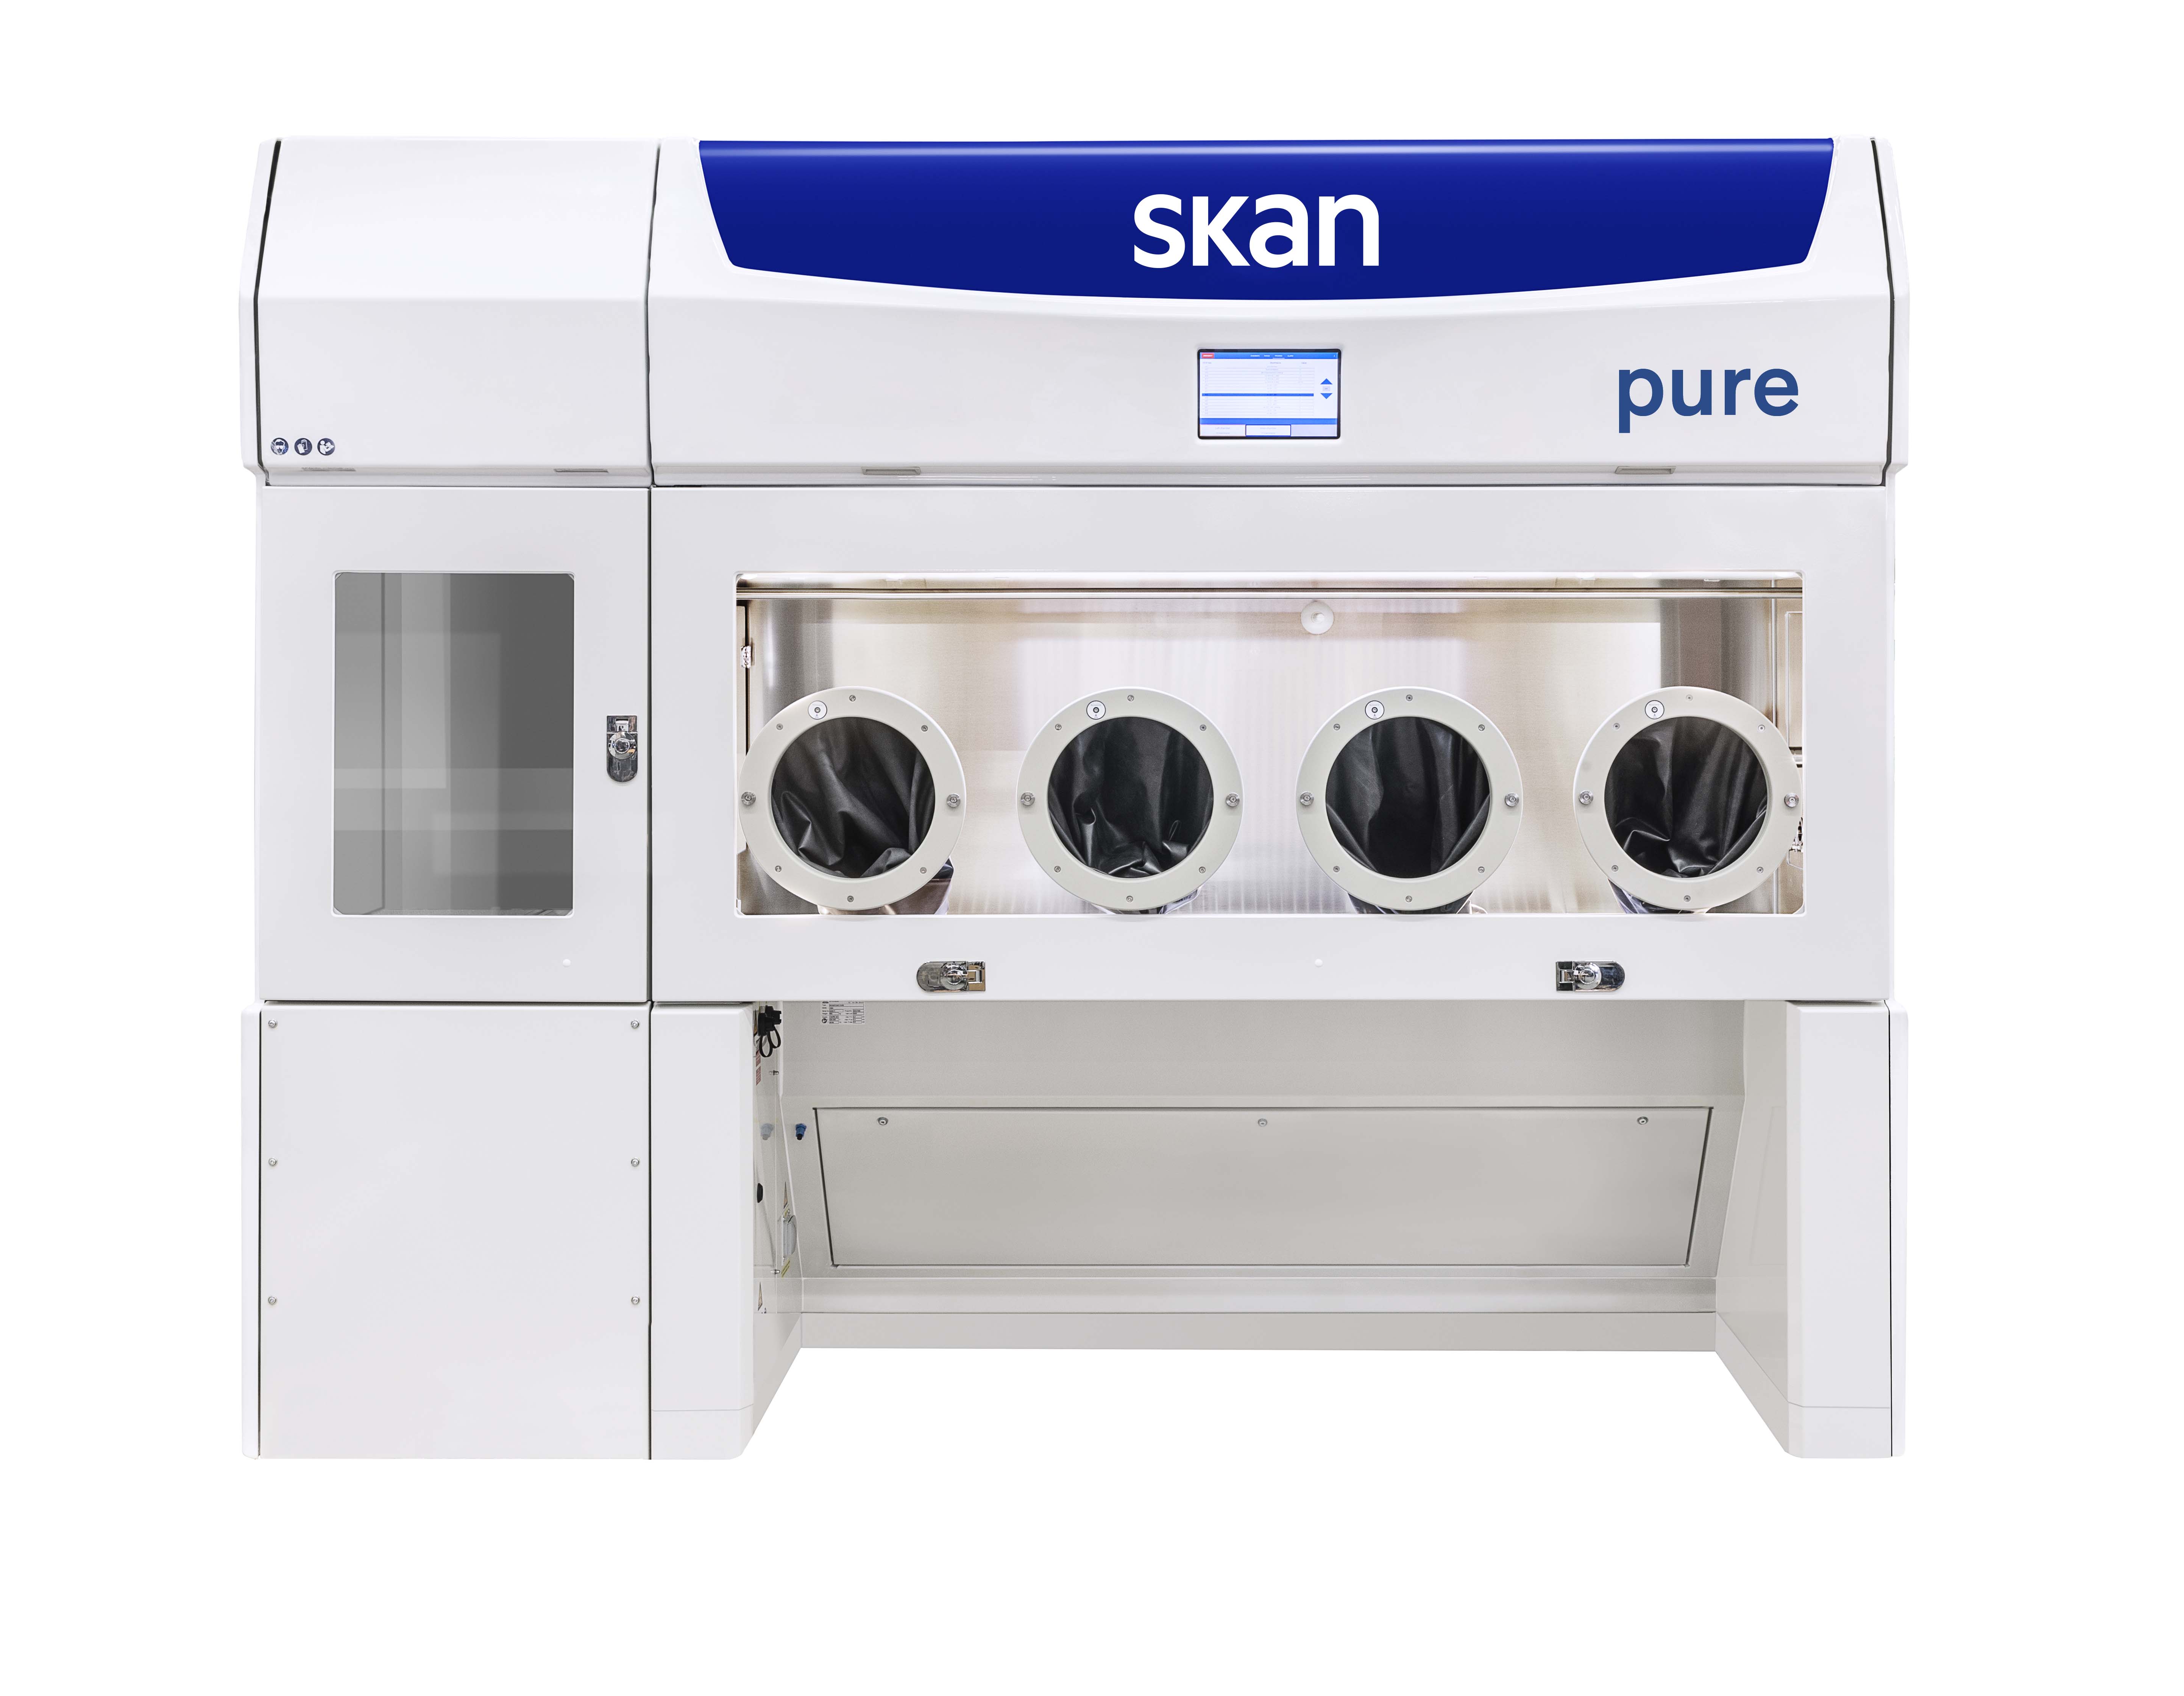 SKAN pure2 Isolator | Buch & Holm